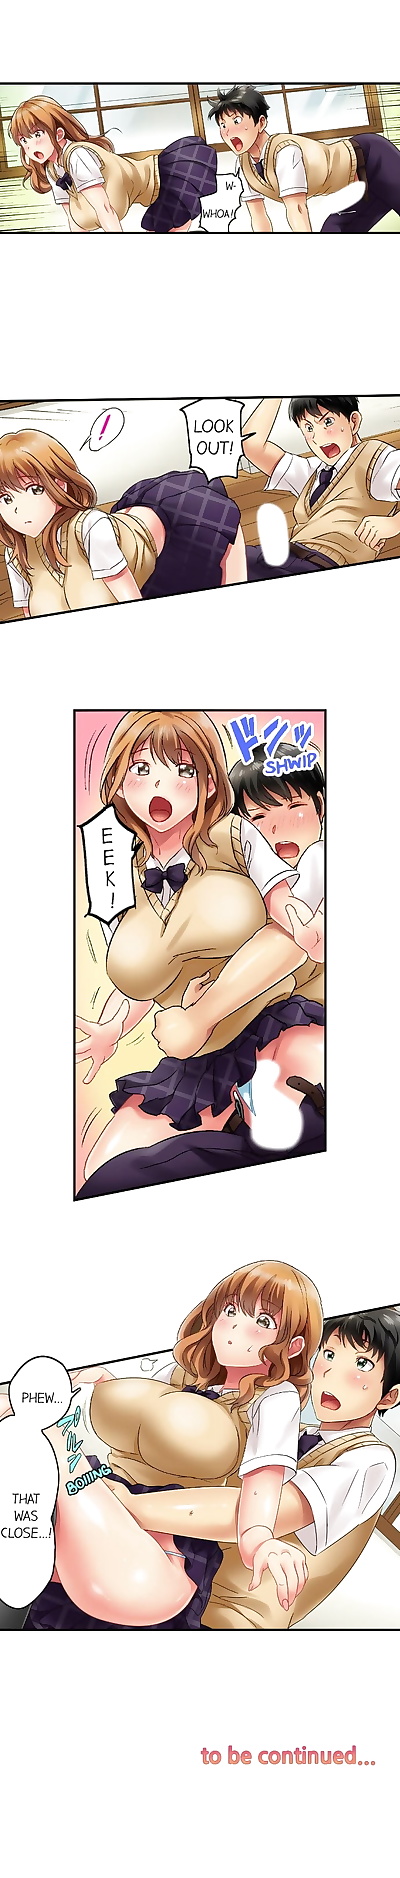 english manga Seeing Her Panties Lets Me Stick In Ch.1, full color , manga  full-censorship